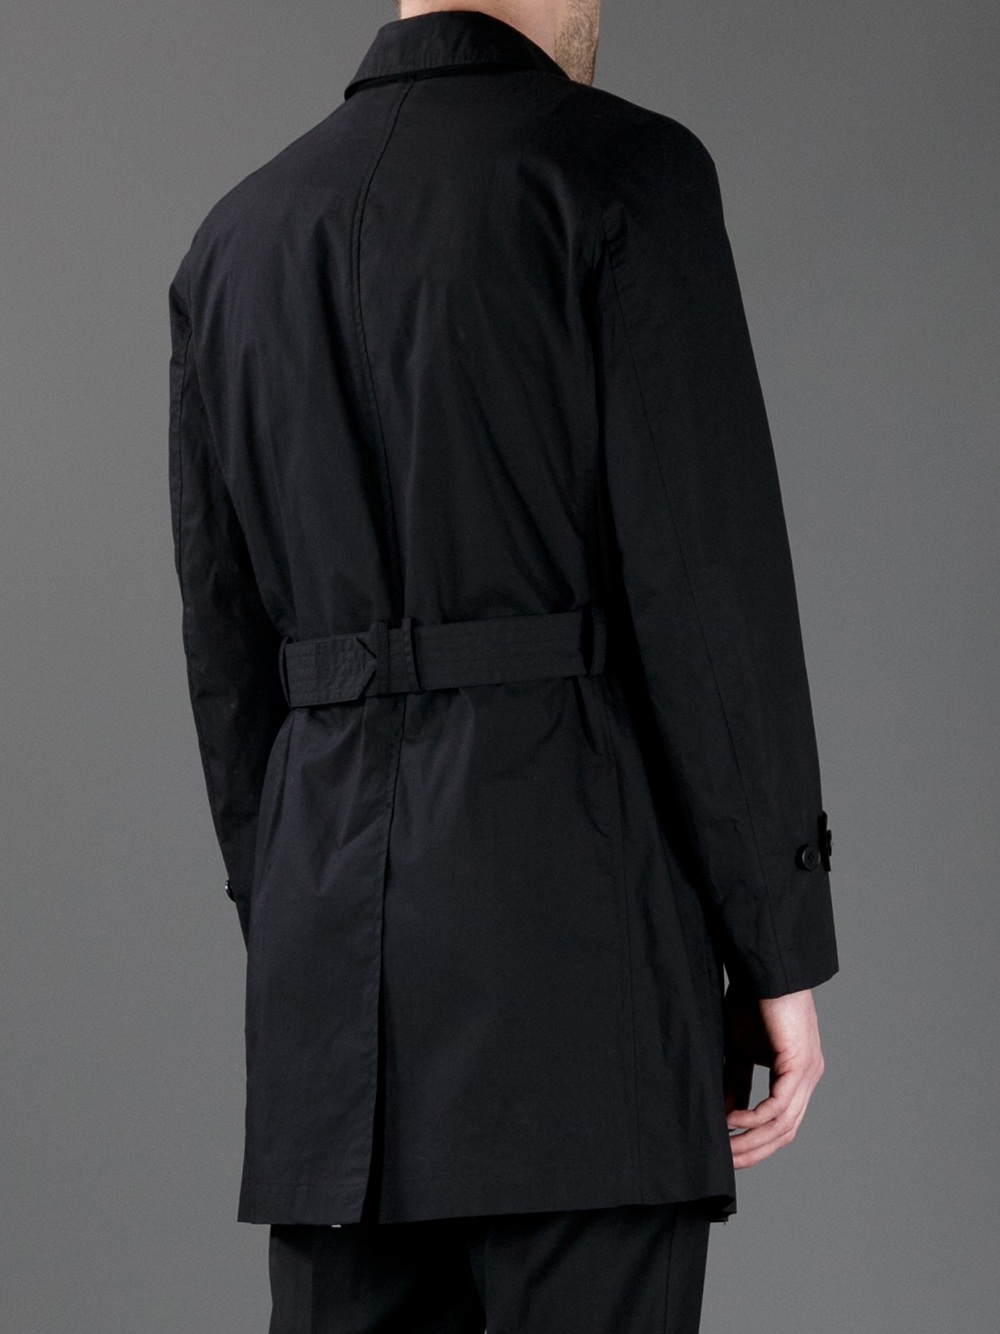 Paul Smith Belted Mac Coat in Black for Men | Lyst